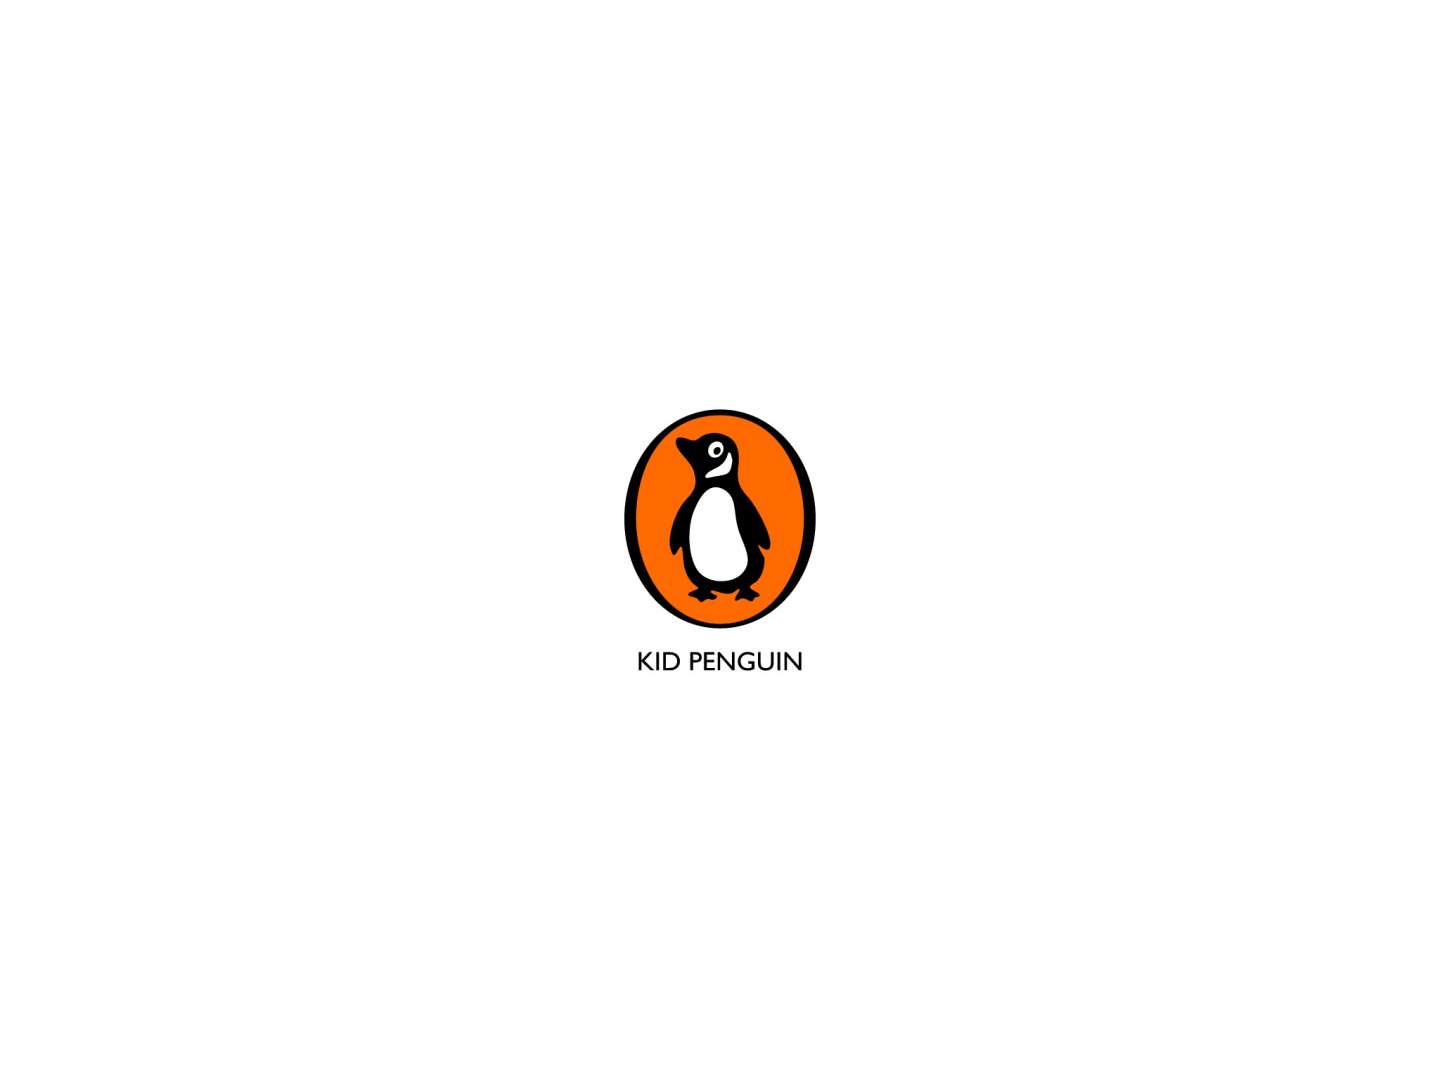 Kid Penguin